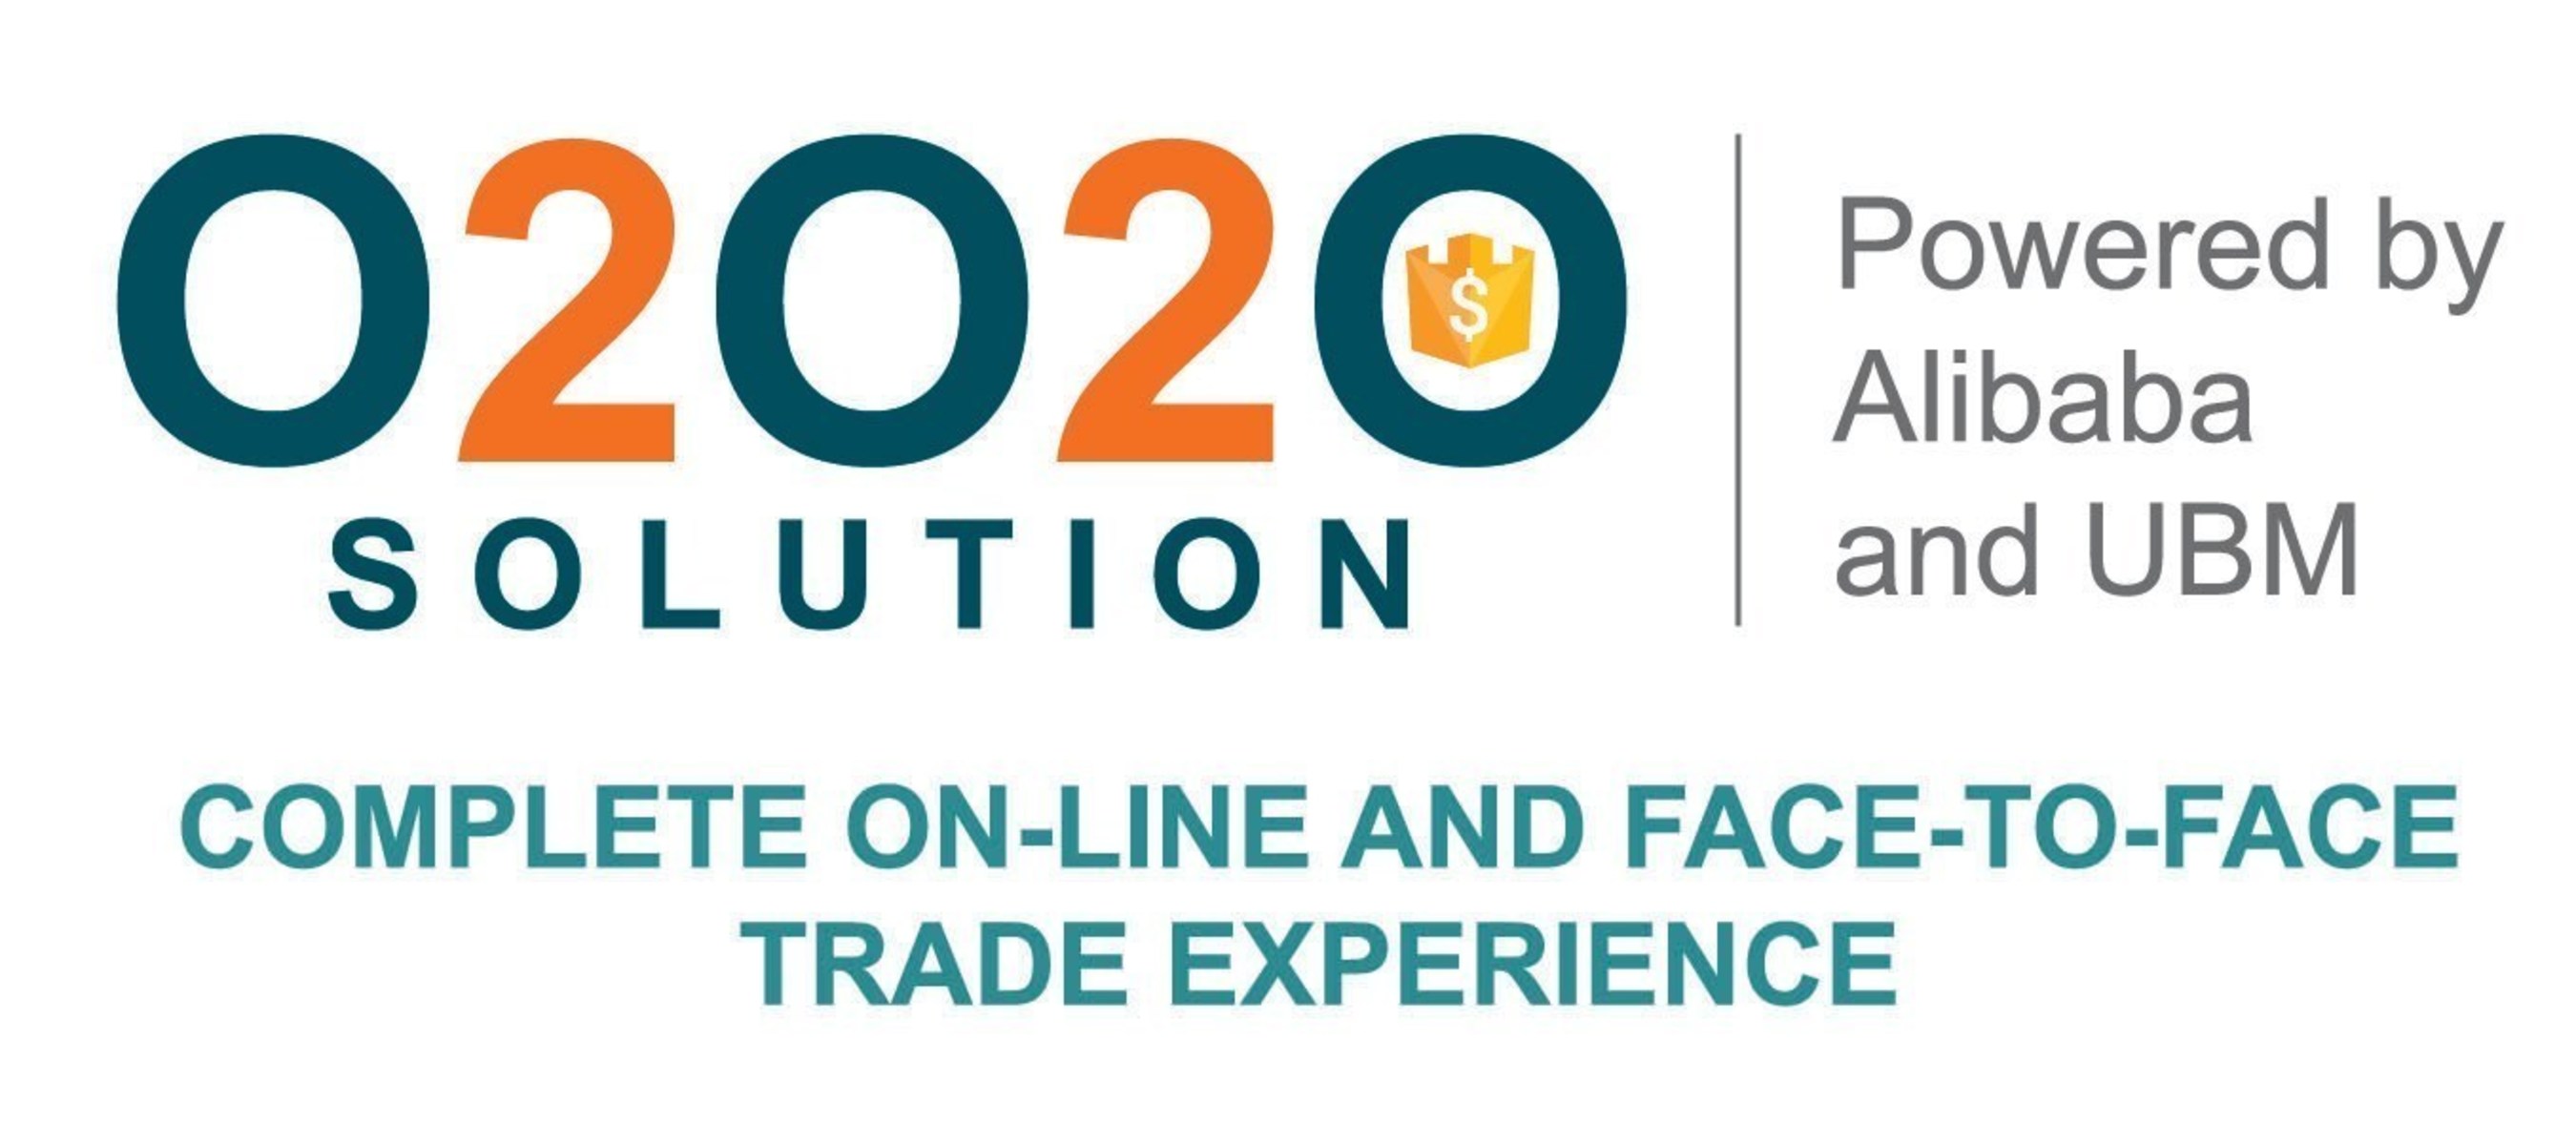 O2O2O Solution Powered by Alibaba and UBM